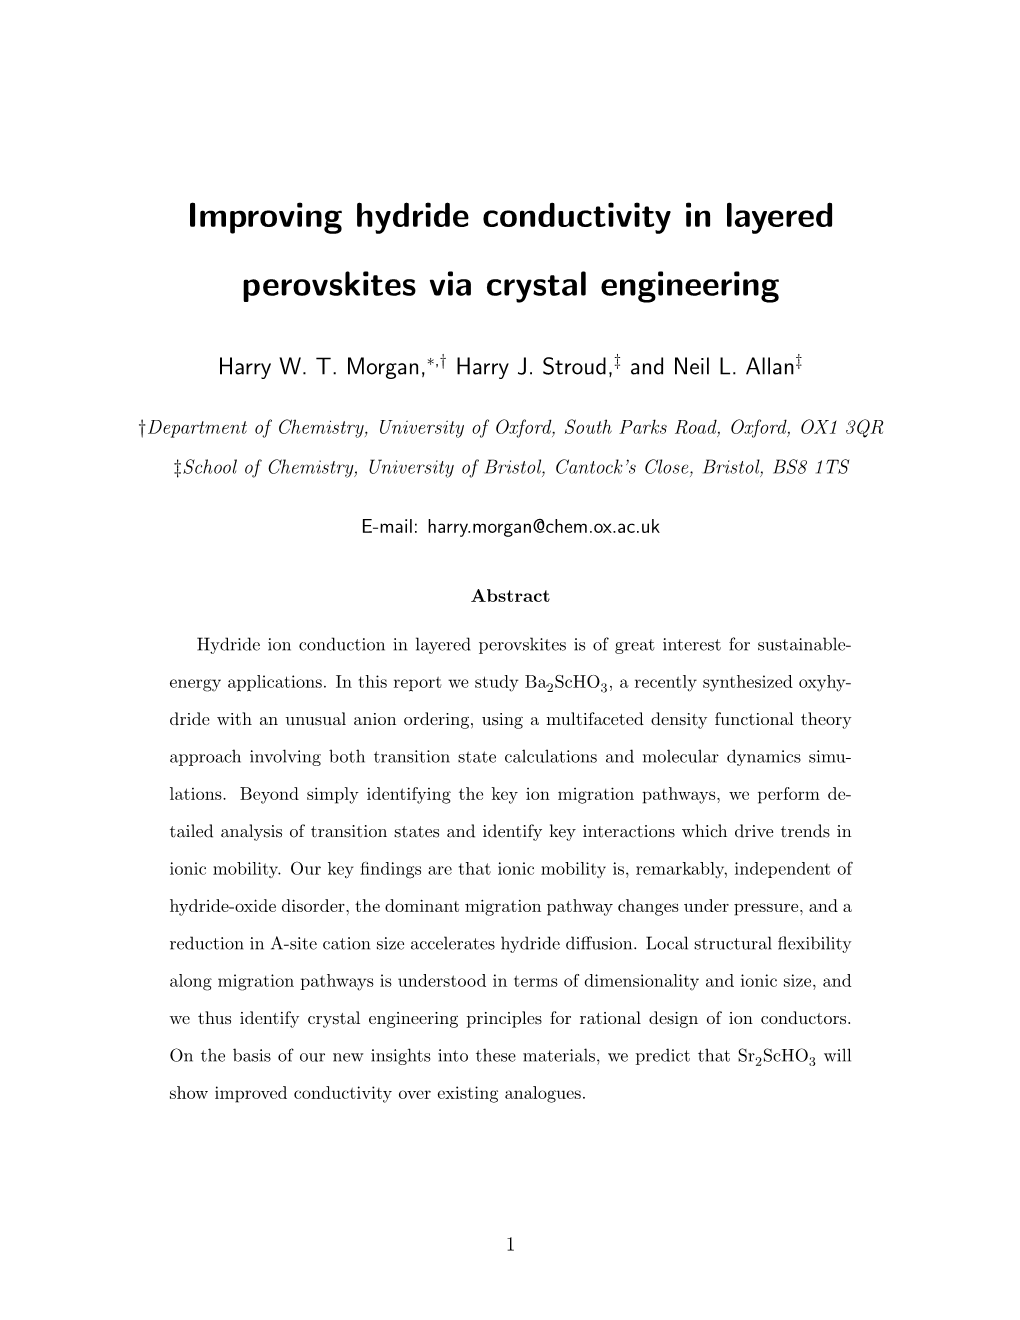 Improving Hydride Conductivity in Layered Perovskites Via Crystal Engineering